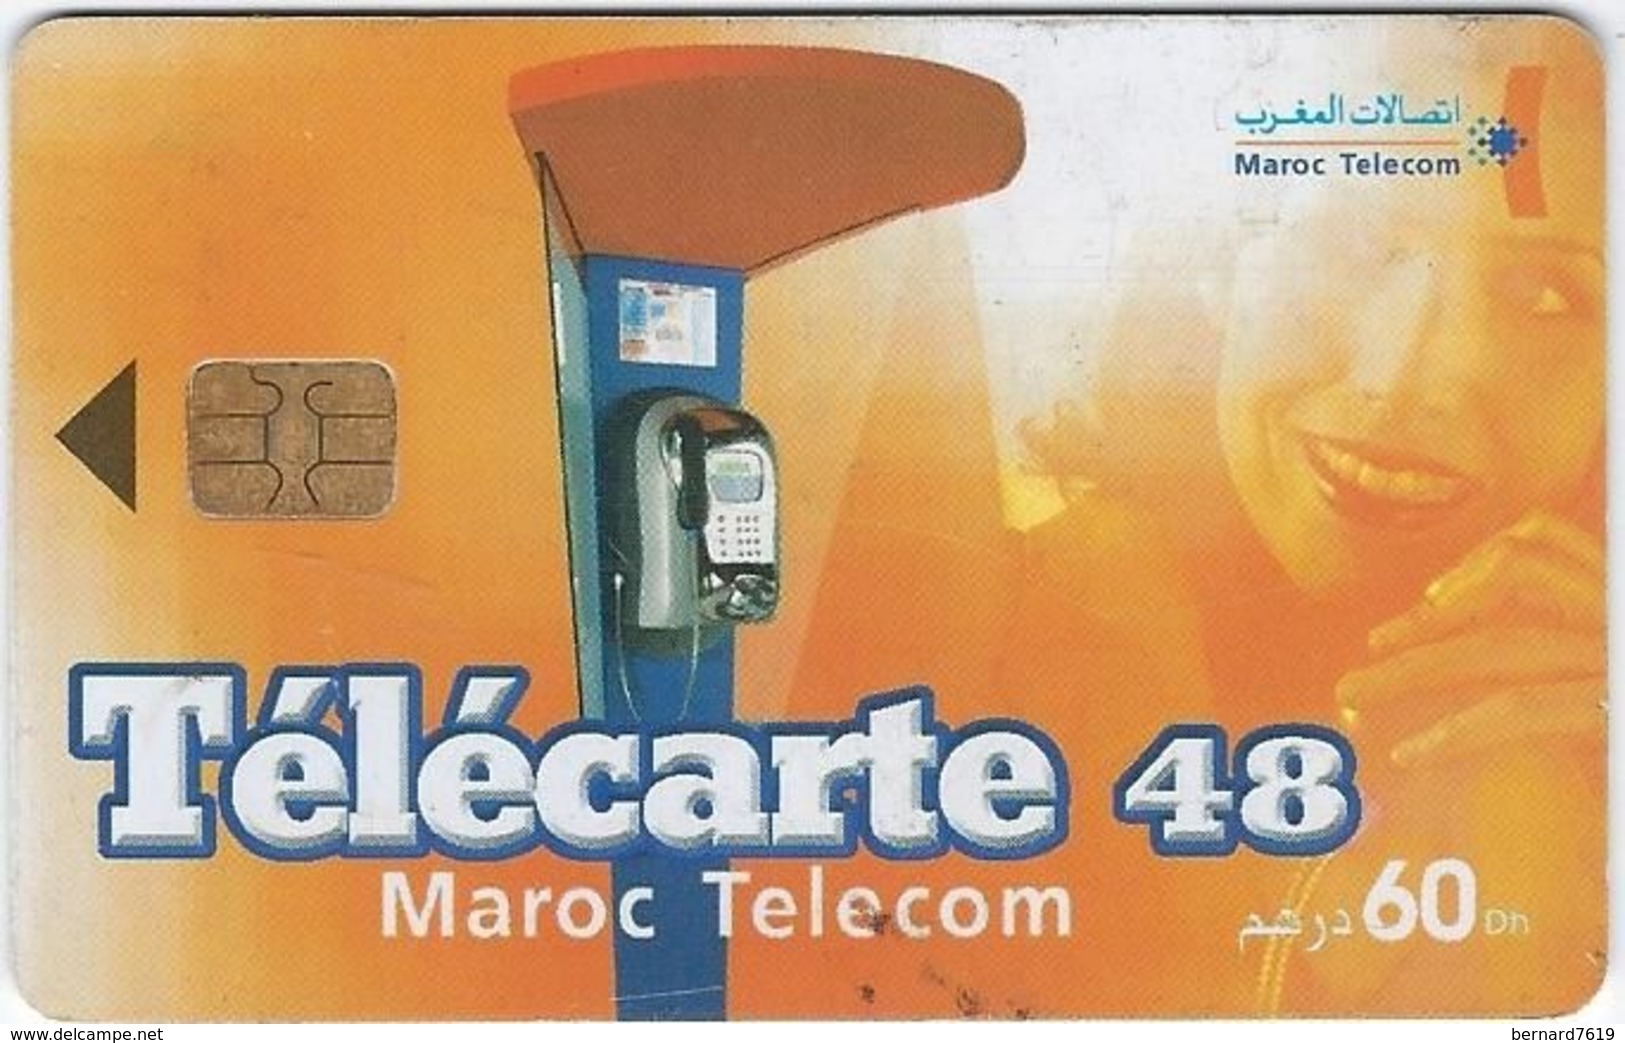 Telecartes  Maroc Telecom 60 Unites Annee 1975 - TAAF - Territori Francesi Meridionali